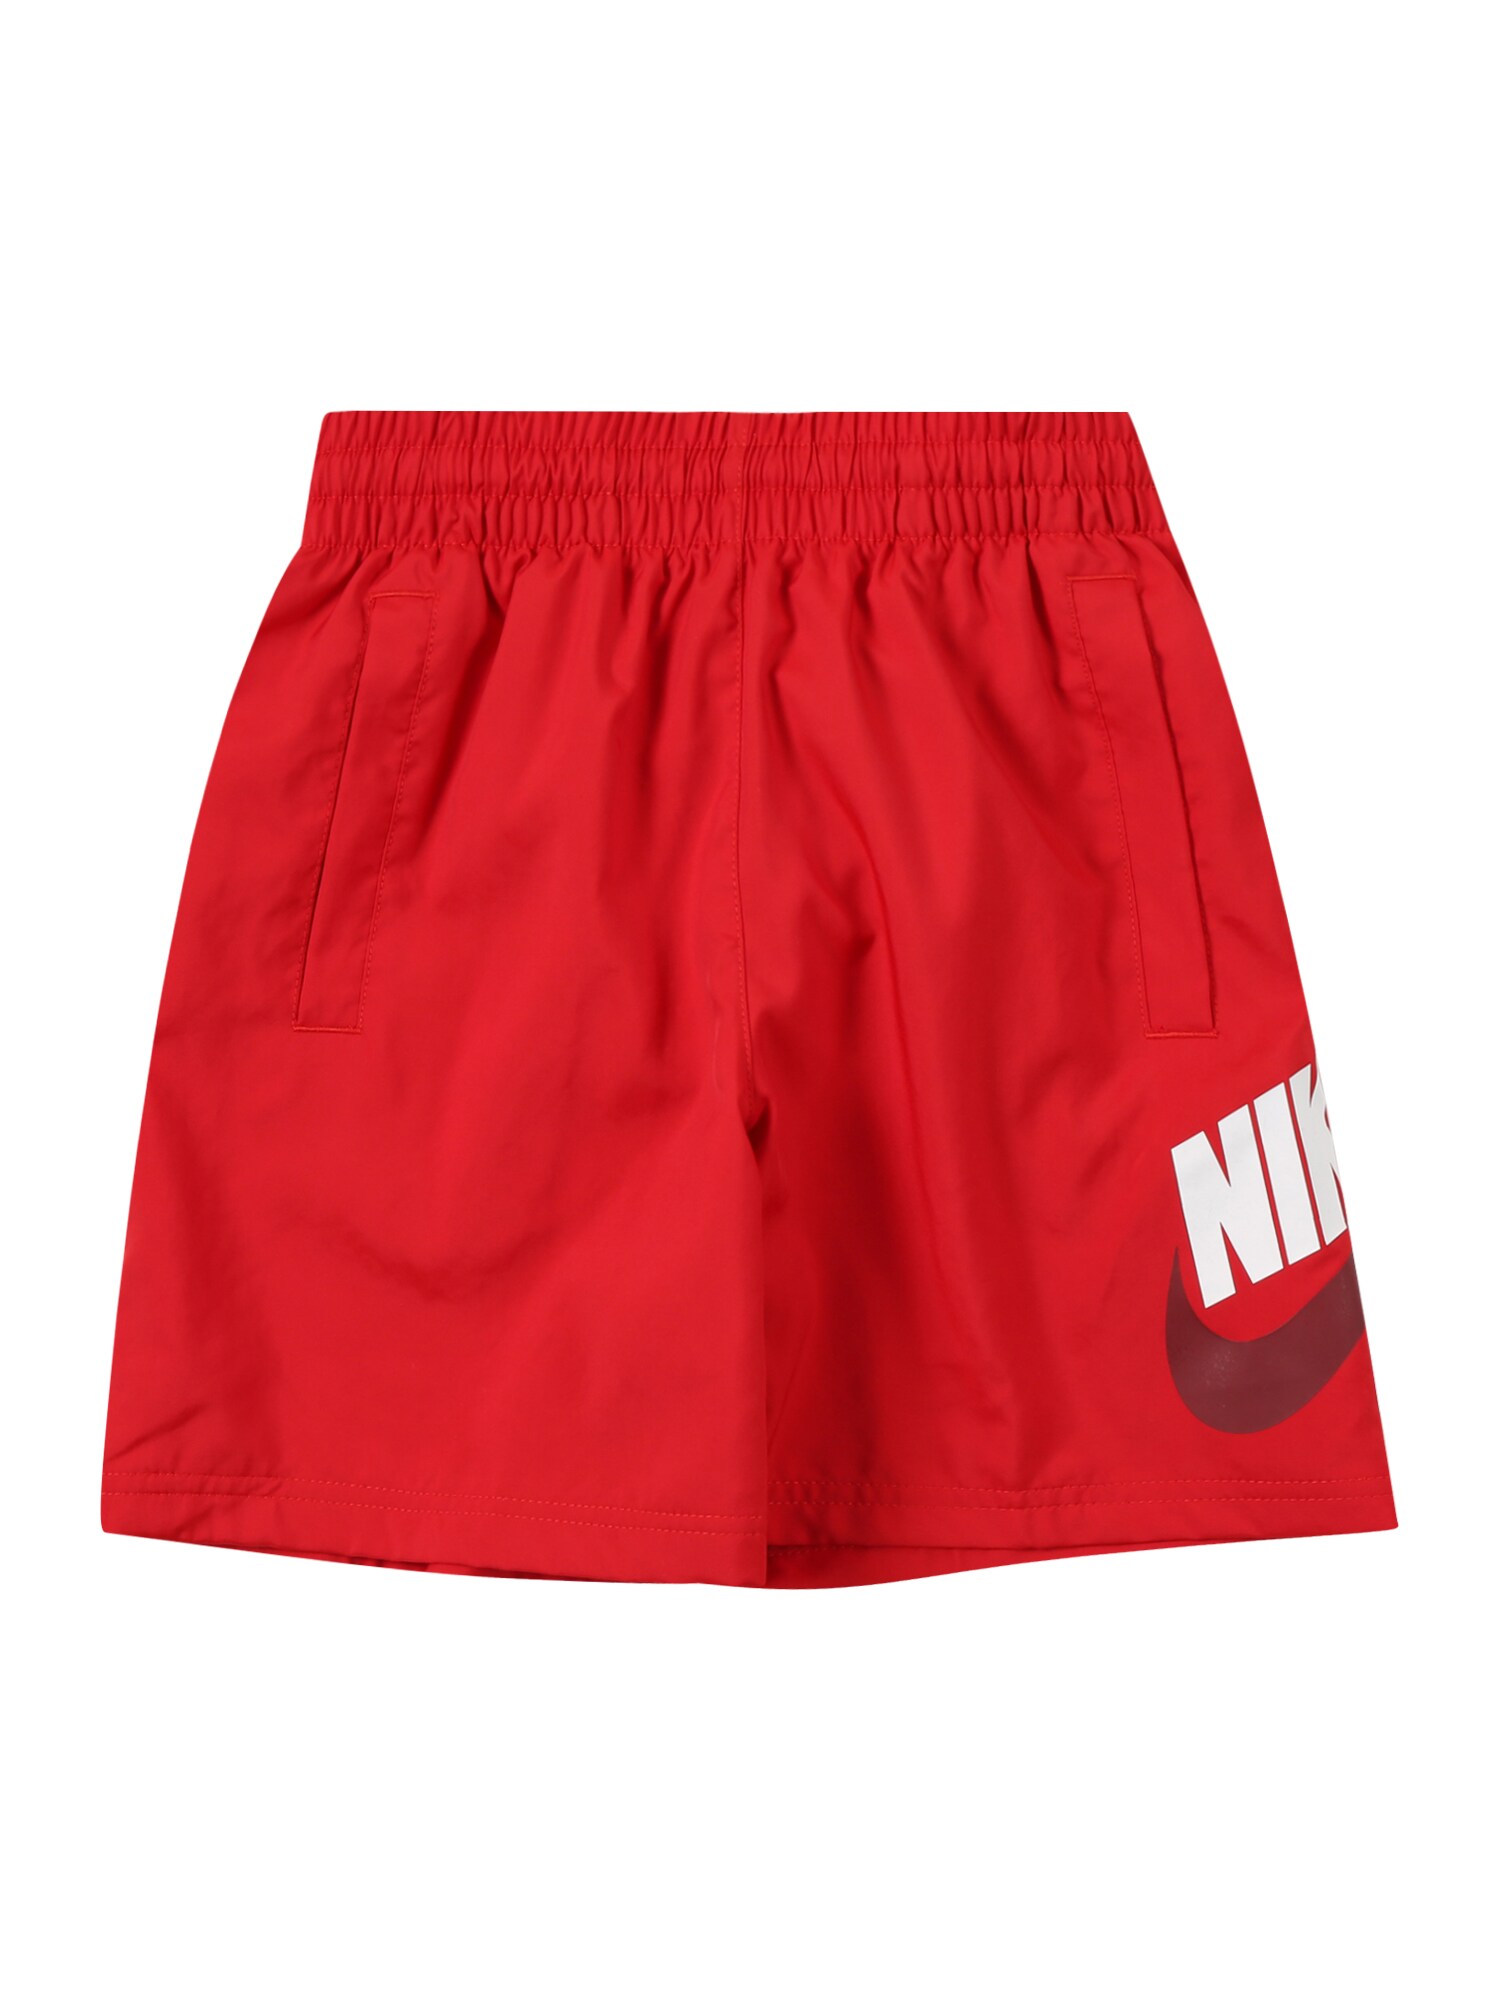 Nike Sportswear Nadrág  piros / bordó / fehér